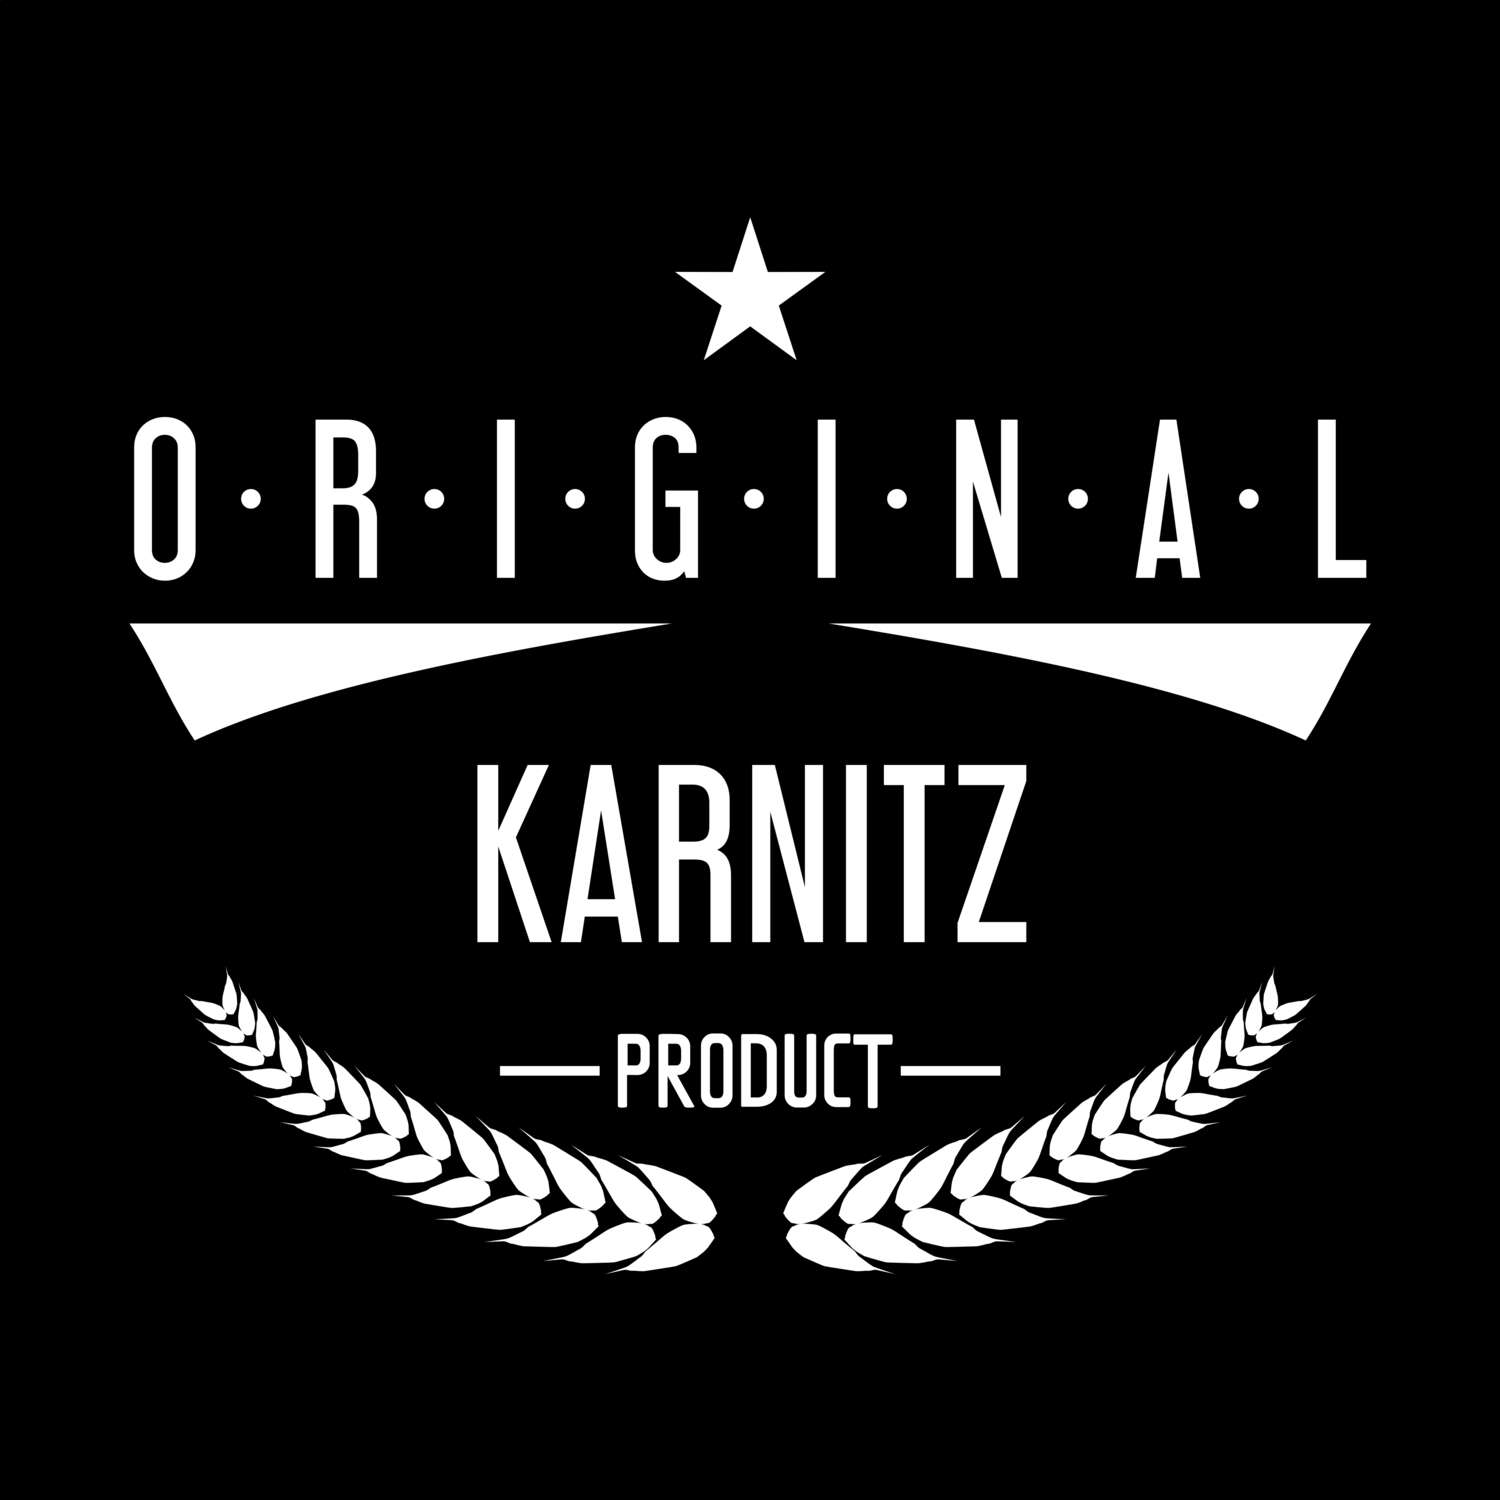 Karnitz T-Shirt »Original Product«